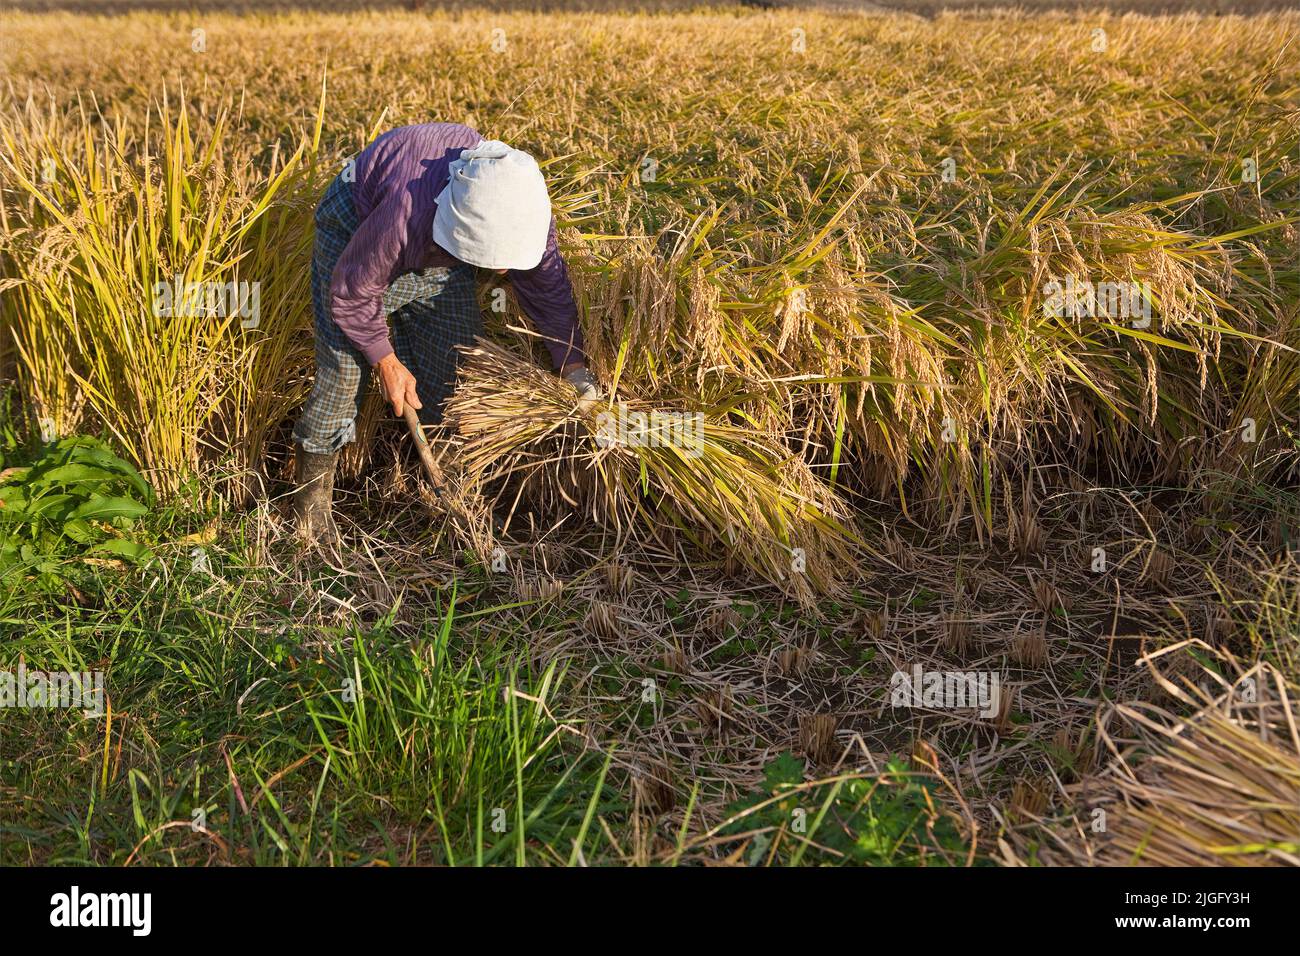 An elderly woman cuts rice stalks at harvest in rural Kumamoto, Kyushu, in Japan Stock Photo